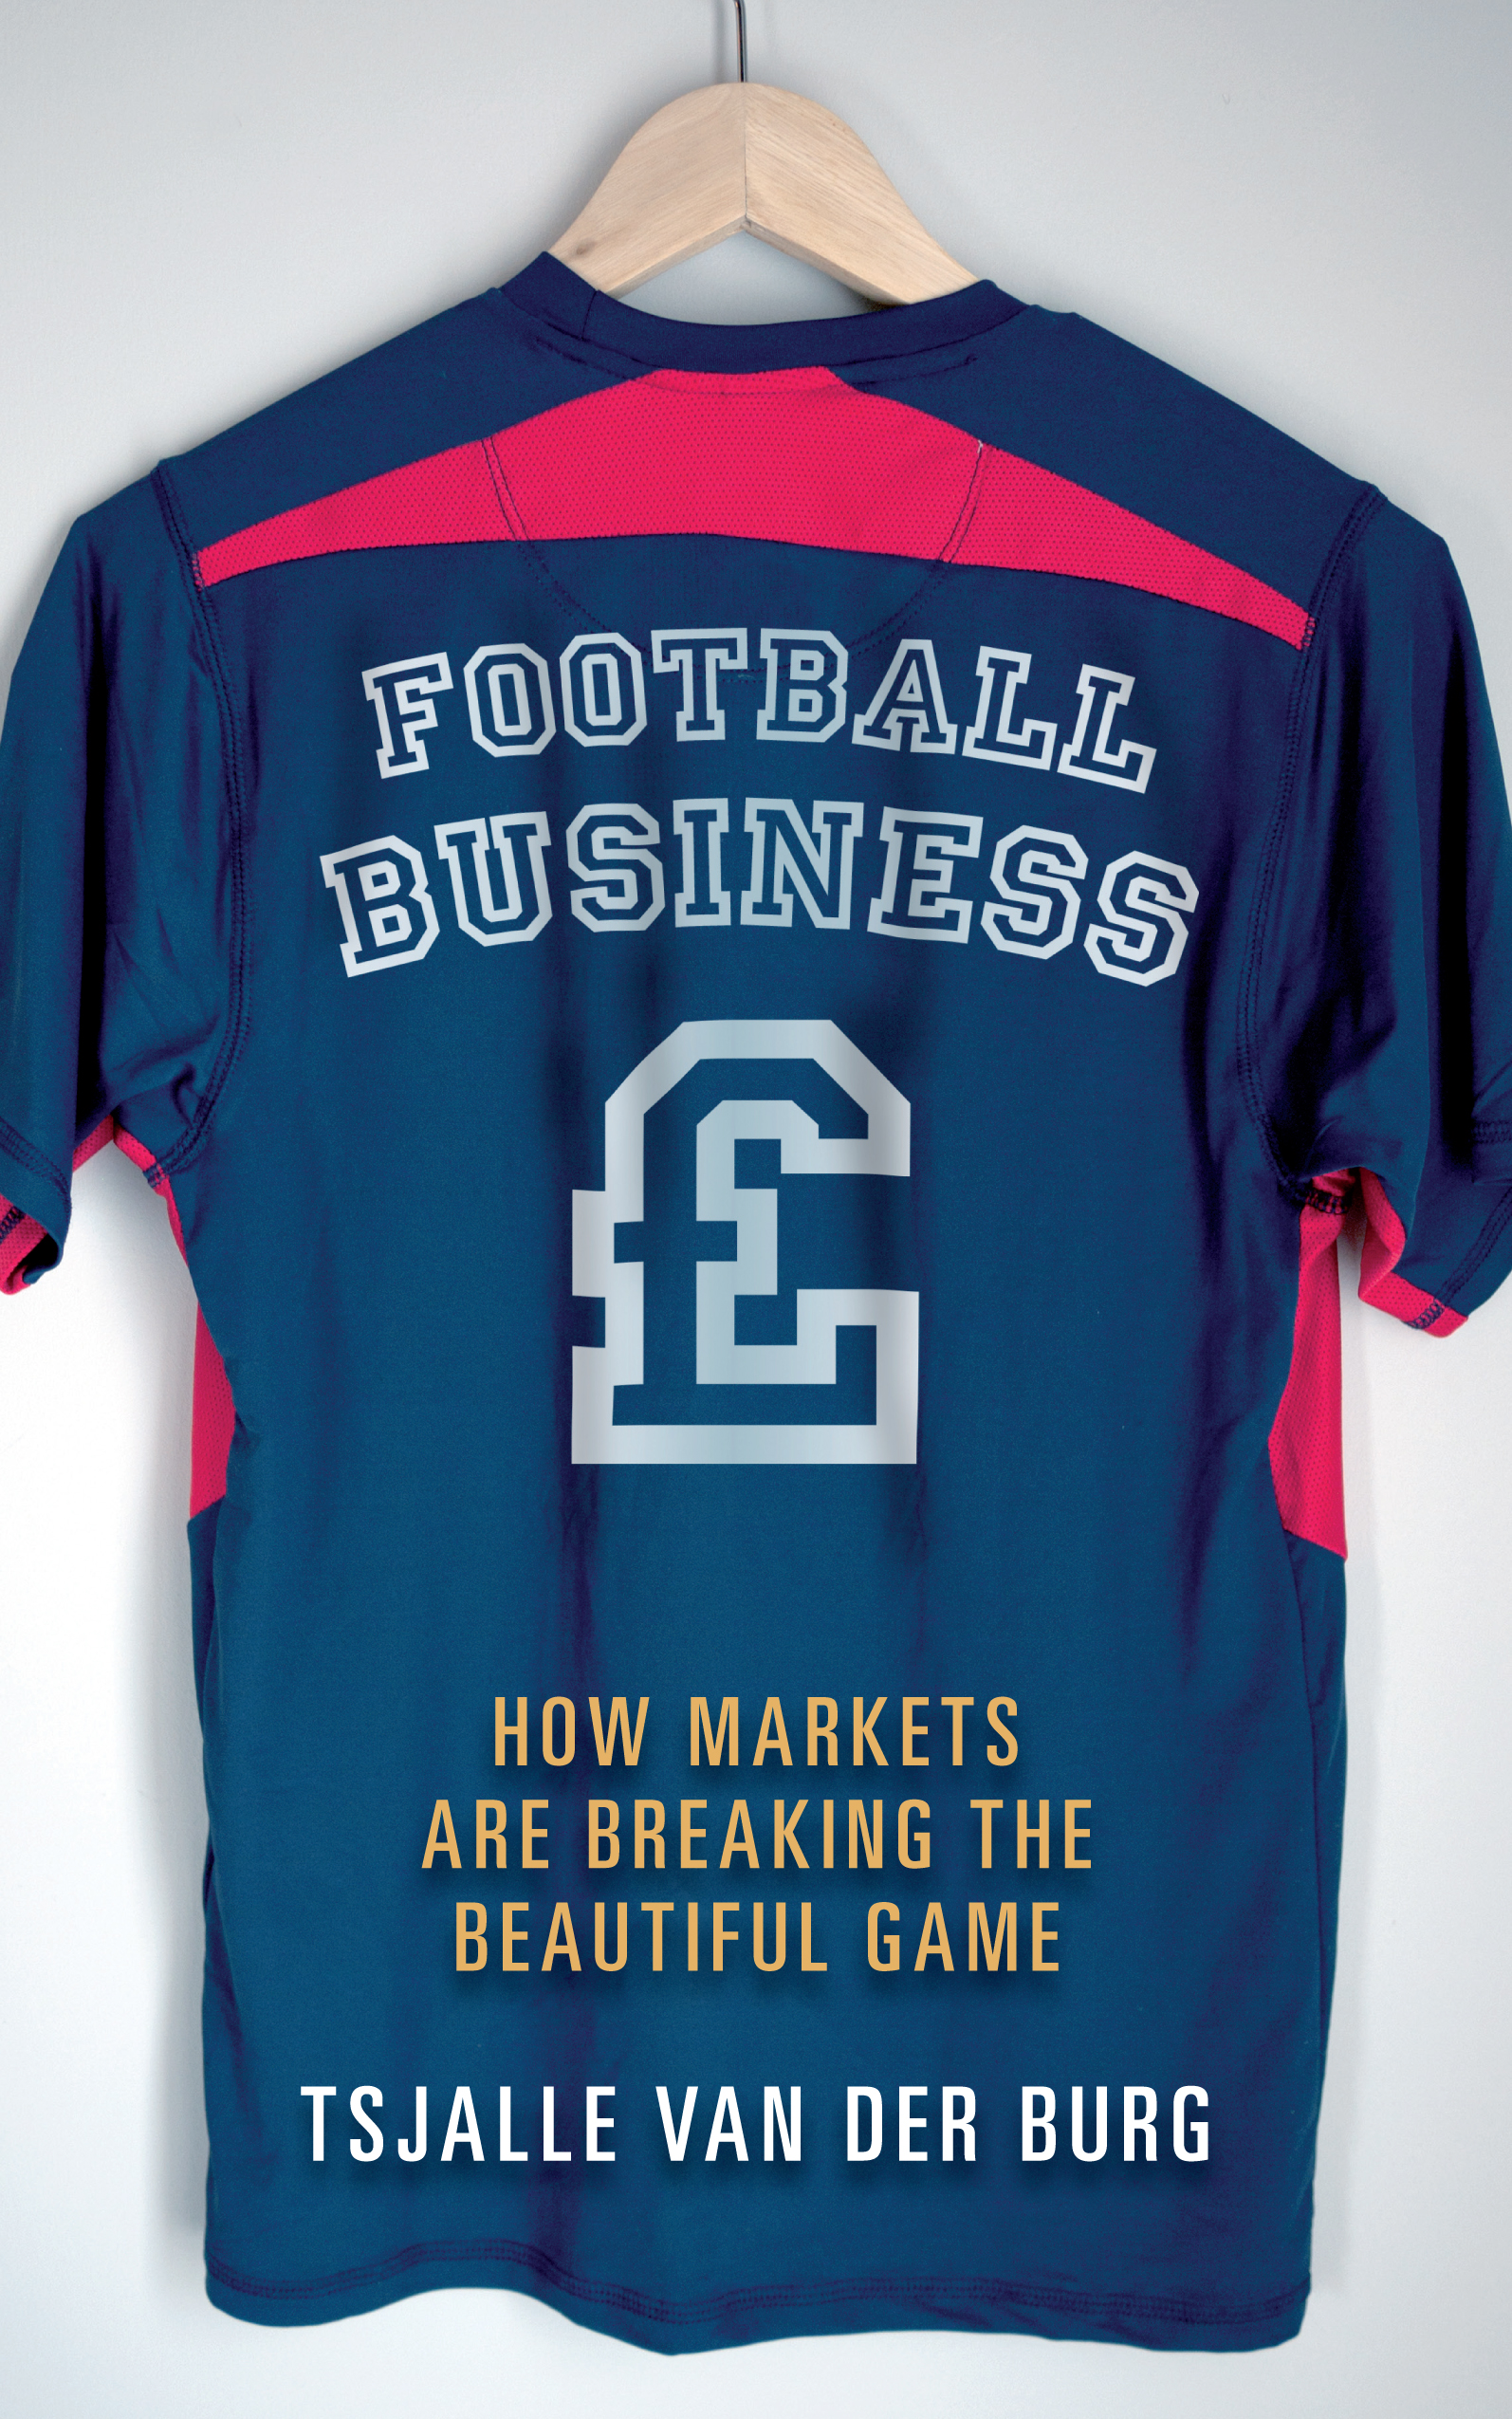 Football business